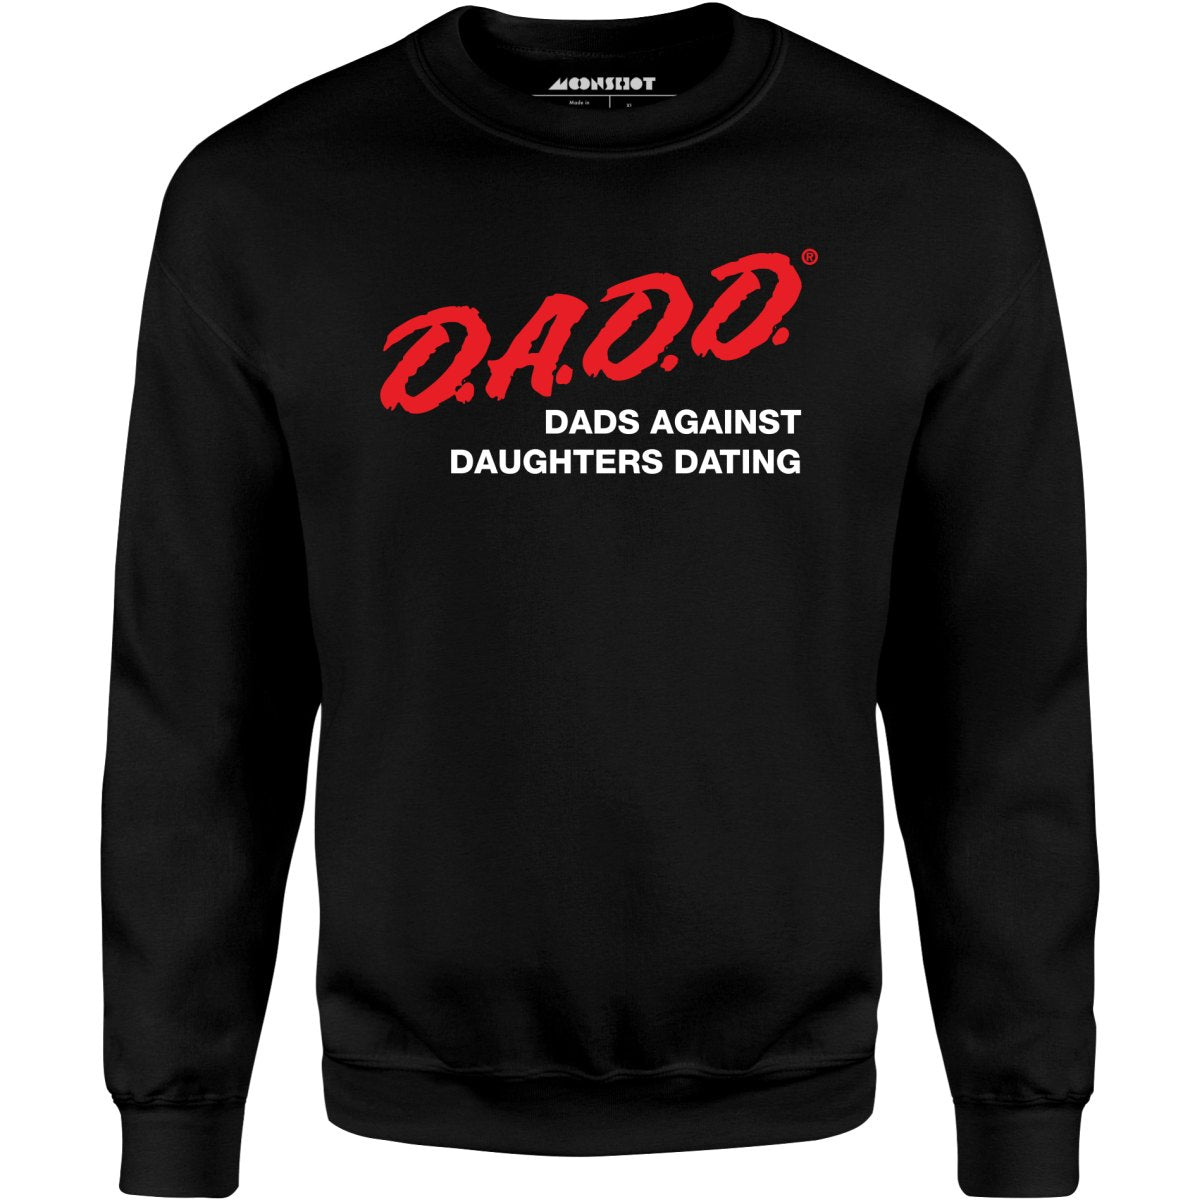 Dads Against Daughters Dating - Unisex Sweatshirt